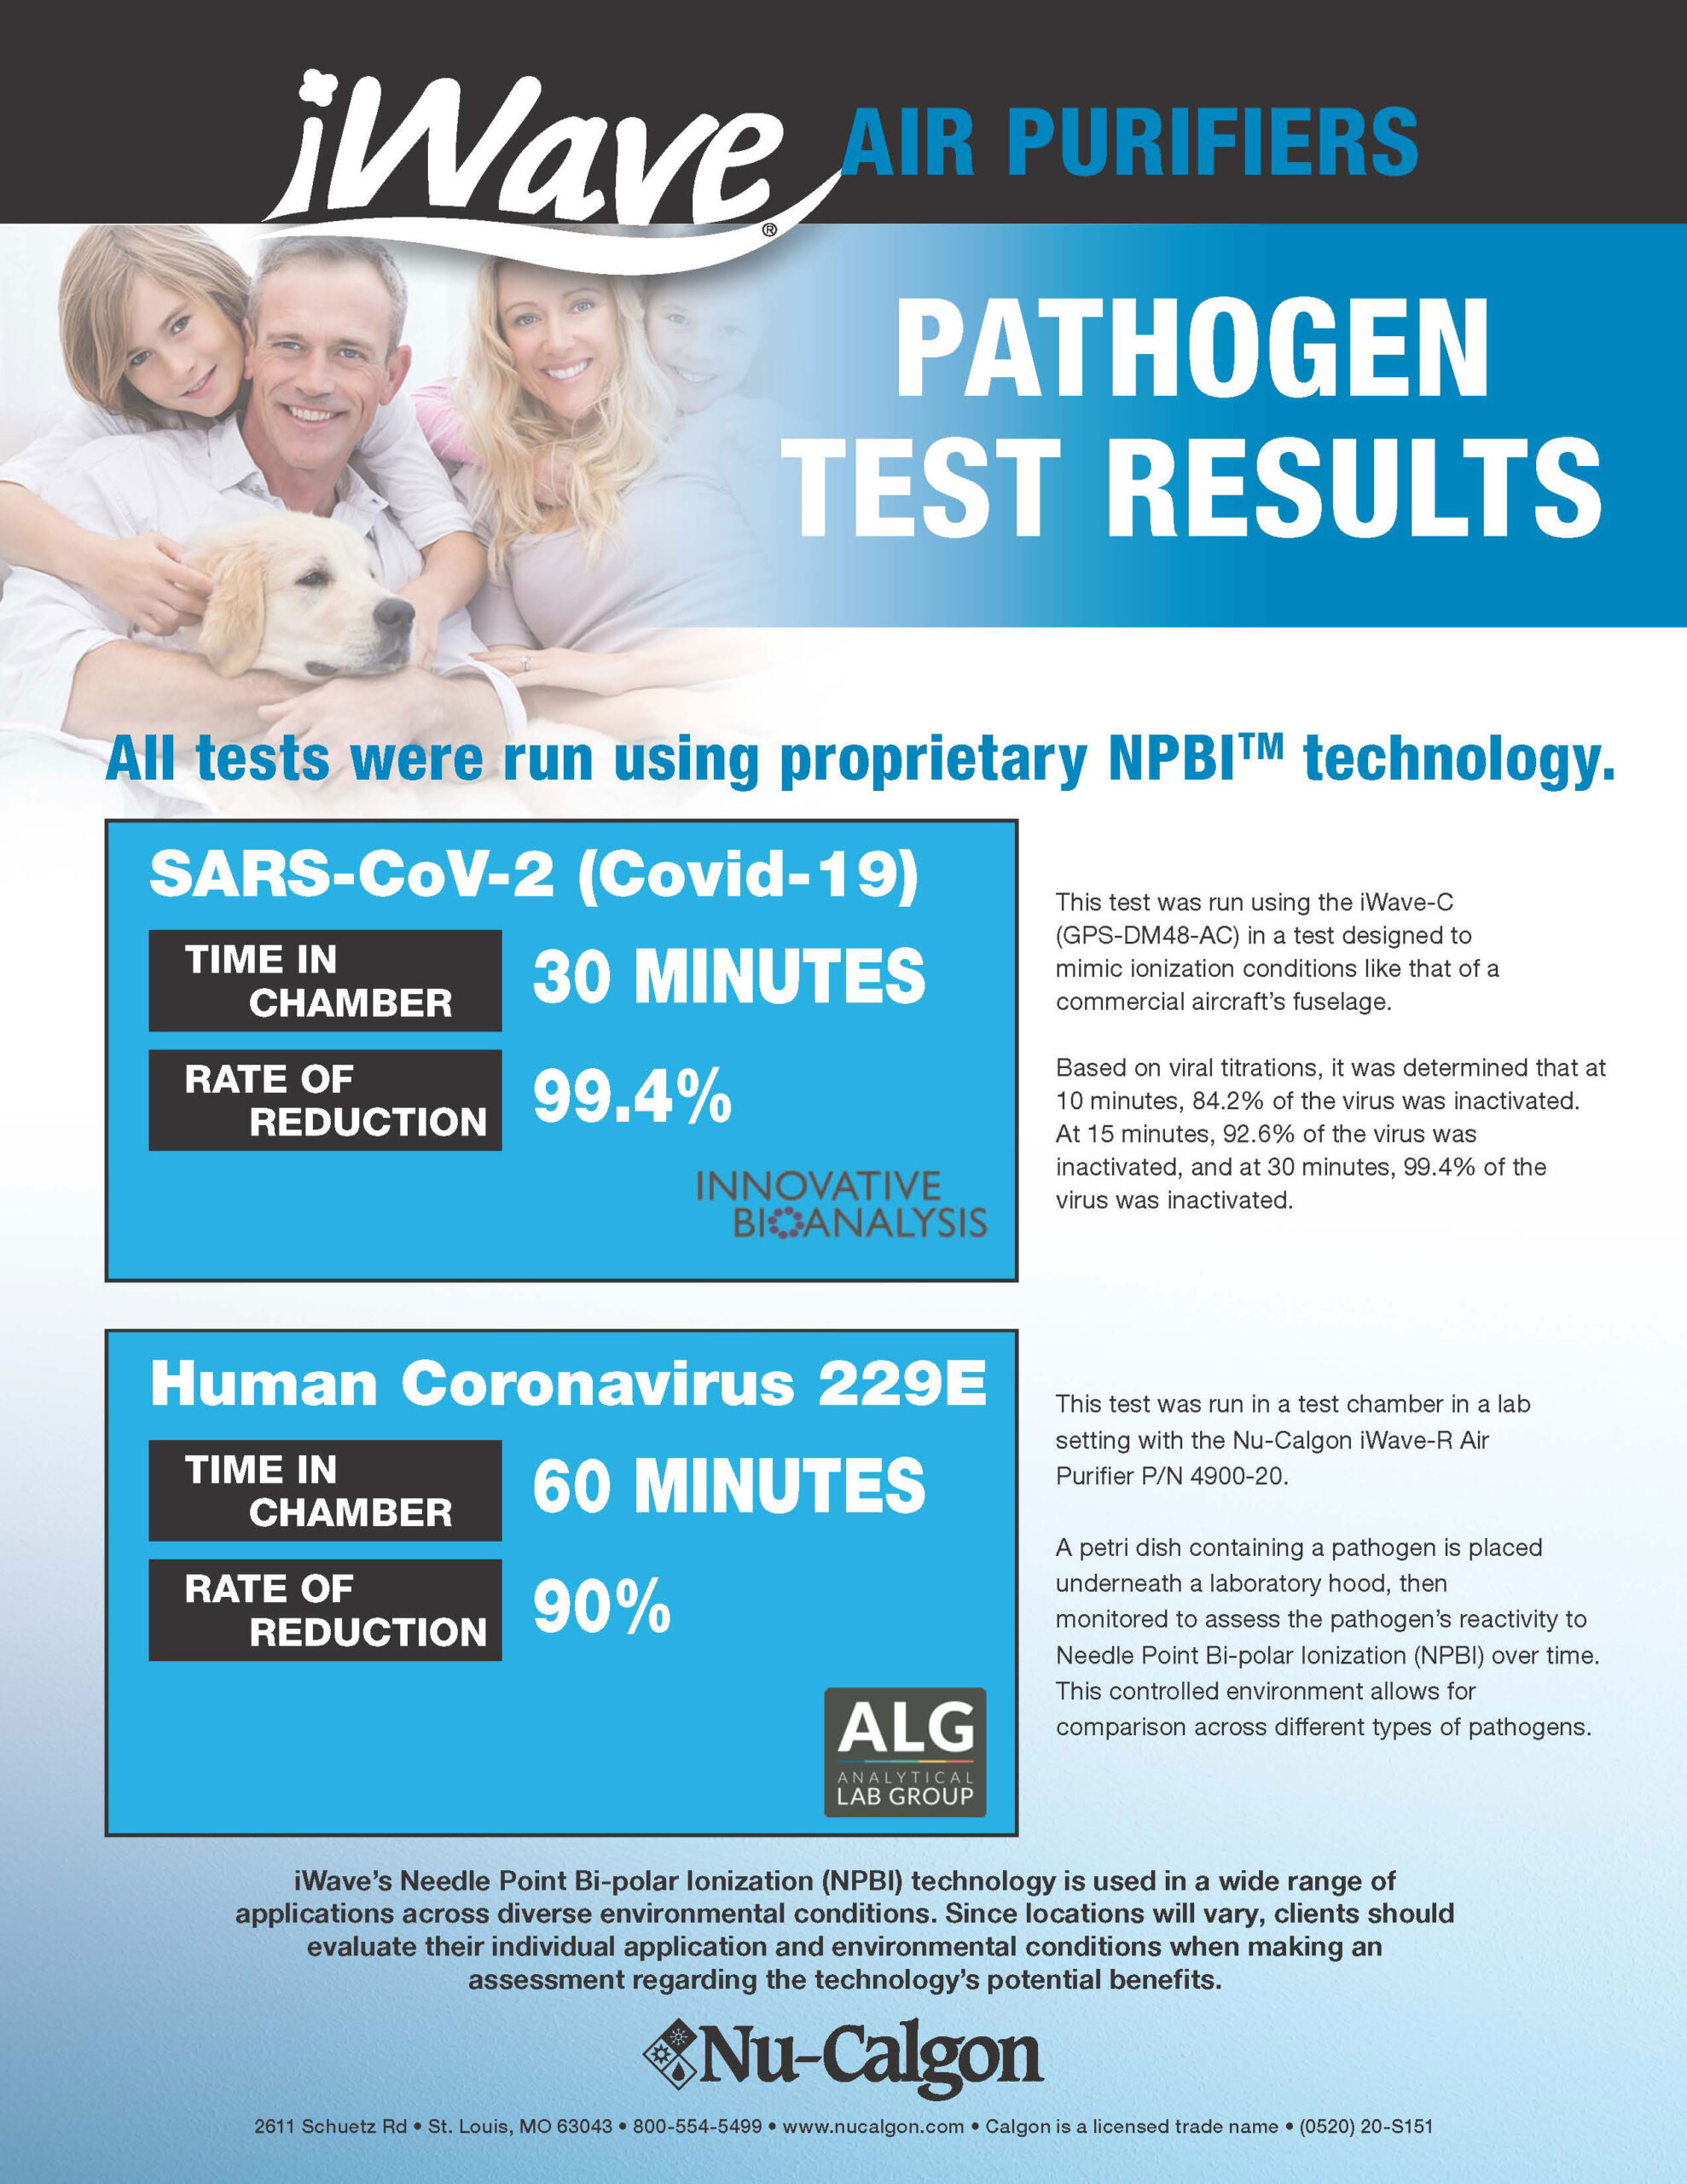 iWave Pathogens Test Results